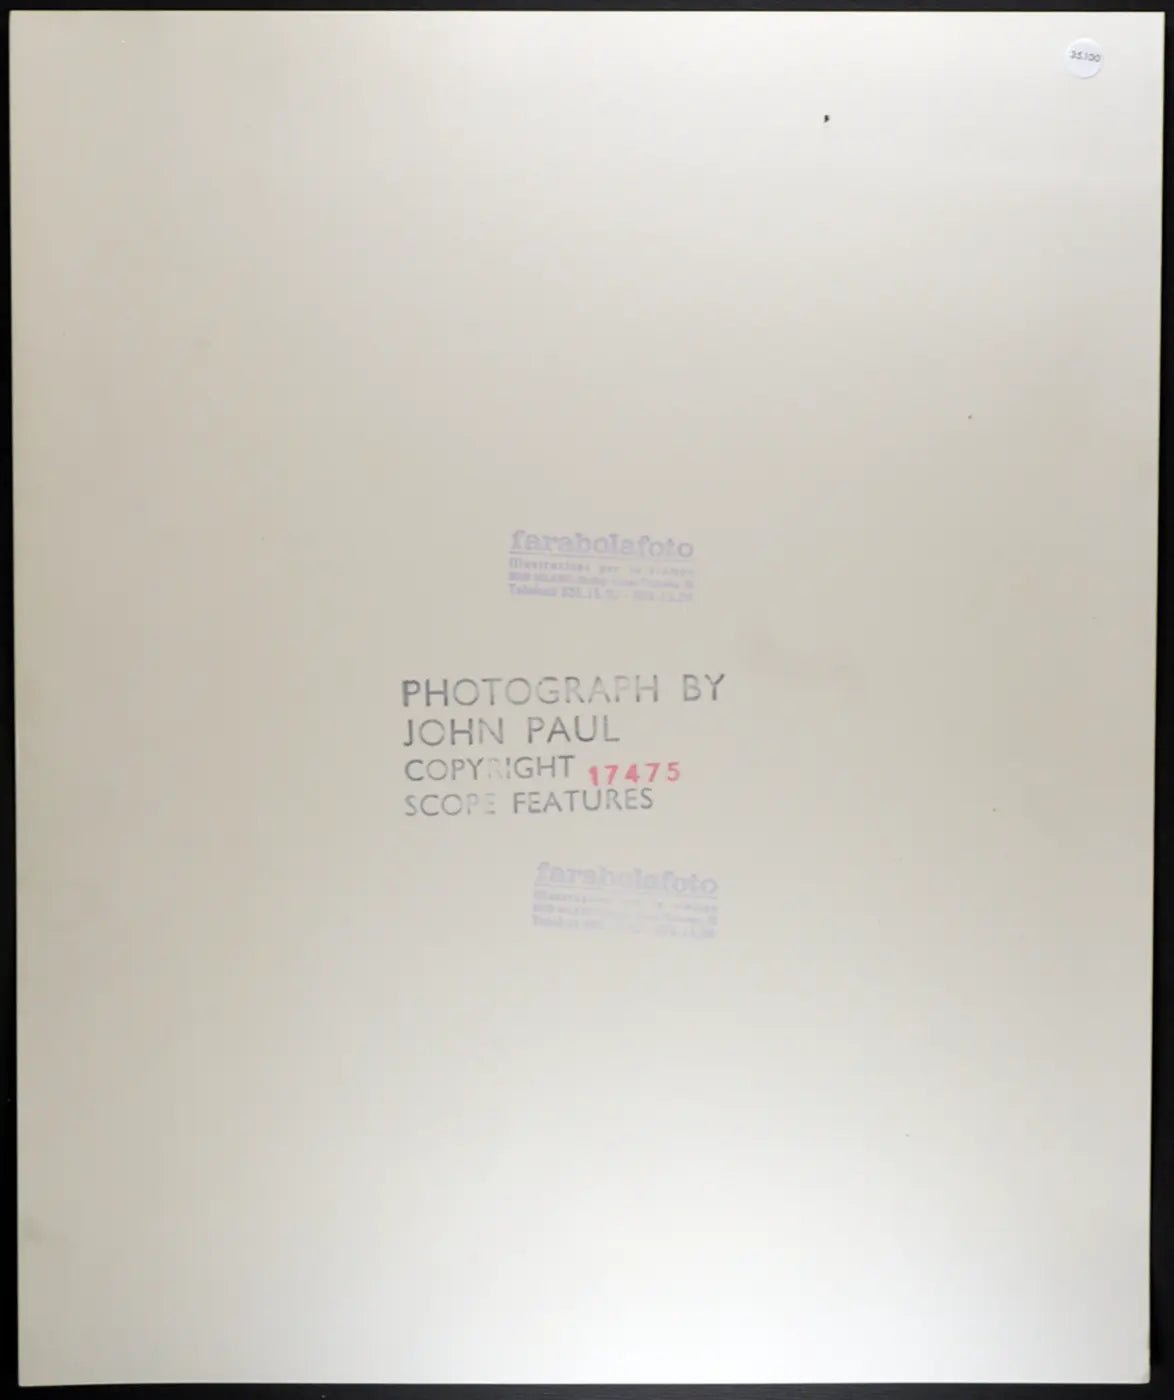 Claudia Udy anni 80 Ft 35100 - Stampa 24x37 cm - Farabola Stampa ai sali d'argento